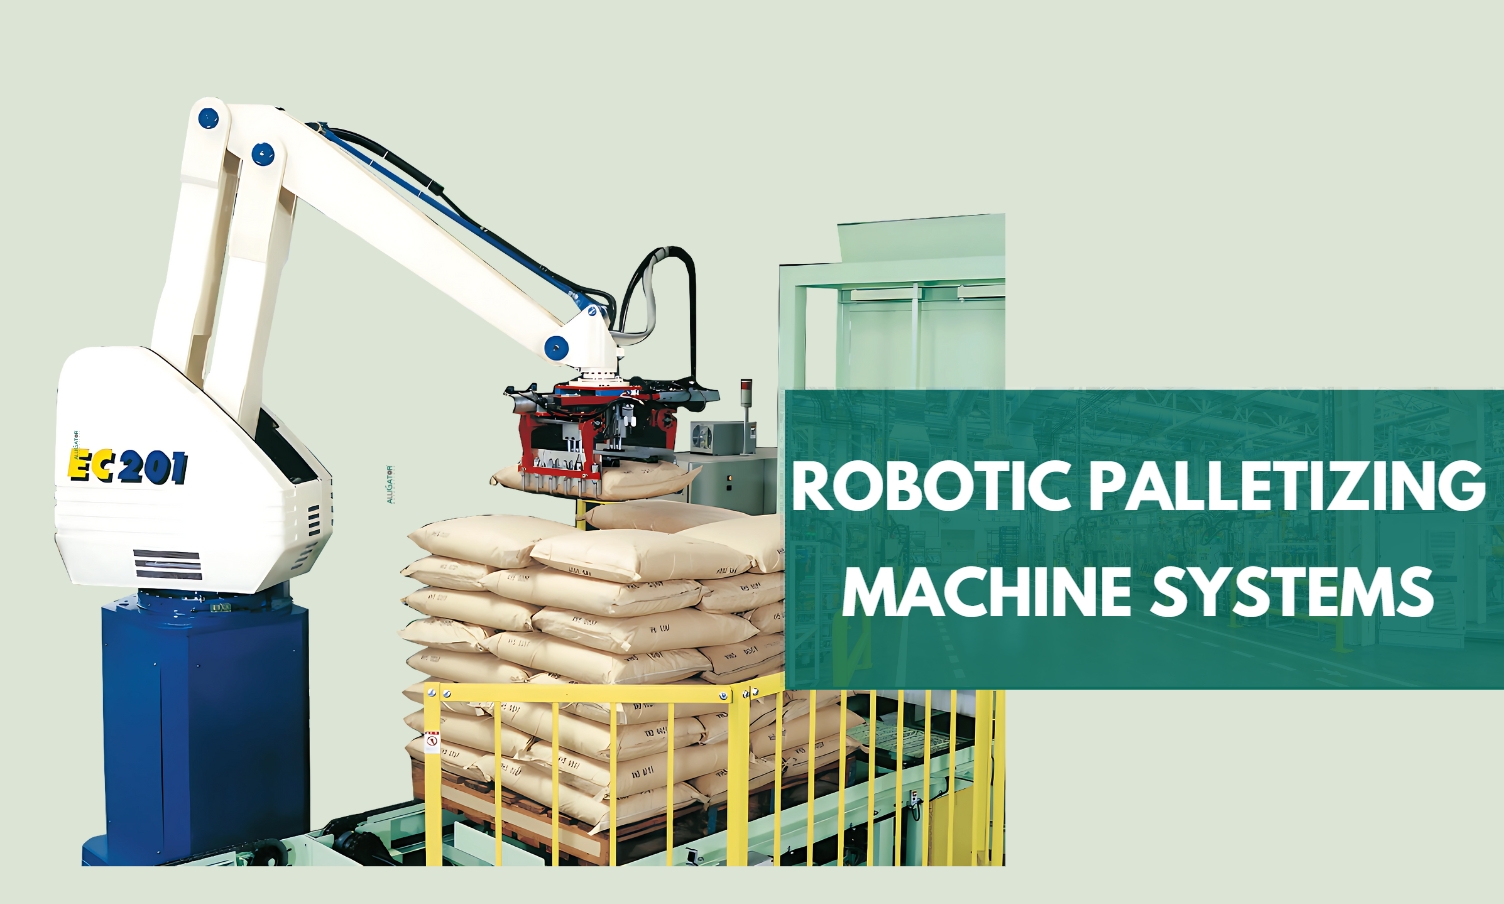 bag-palletizing-system-robotic-bag-stacking-automation-image